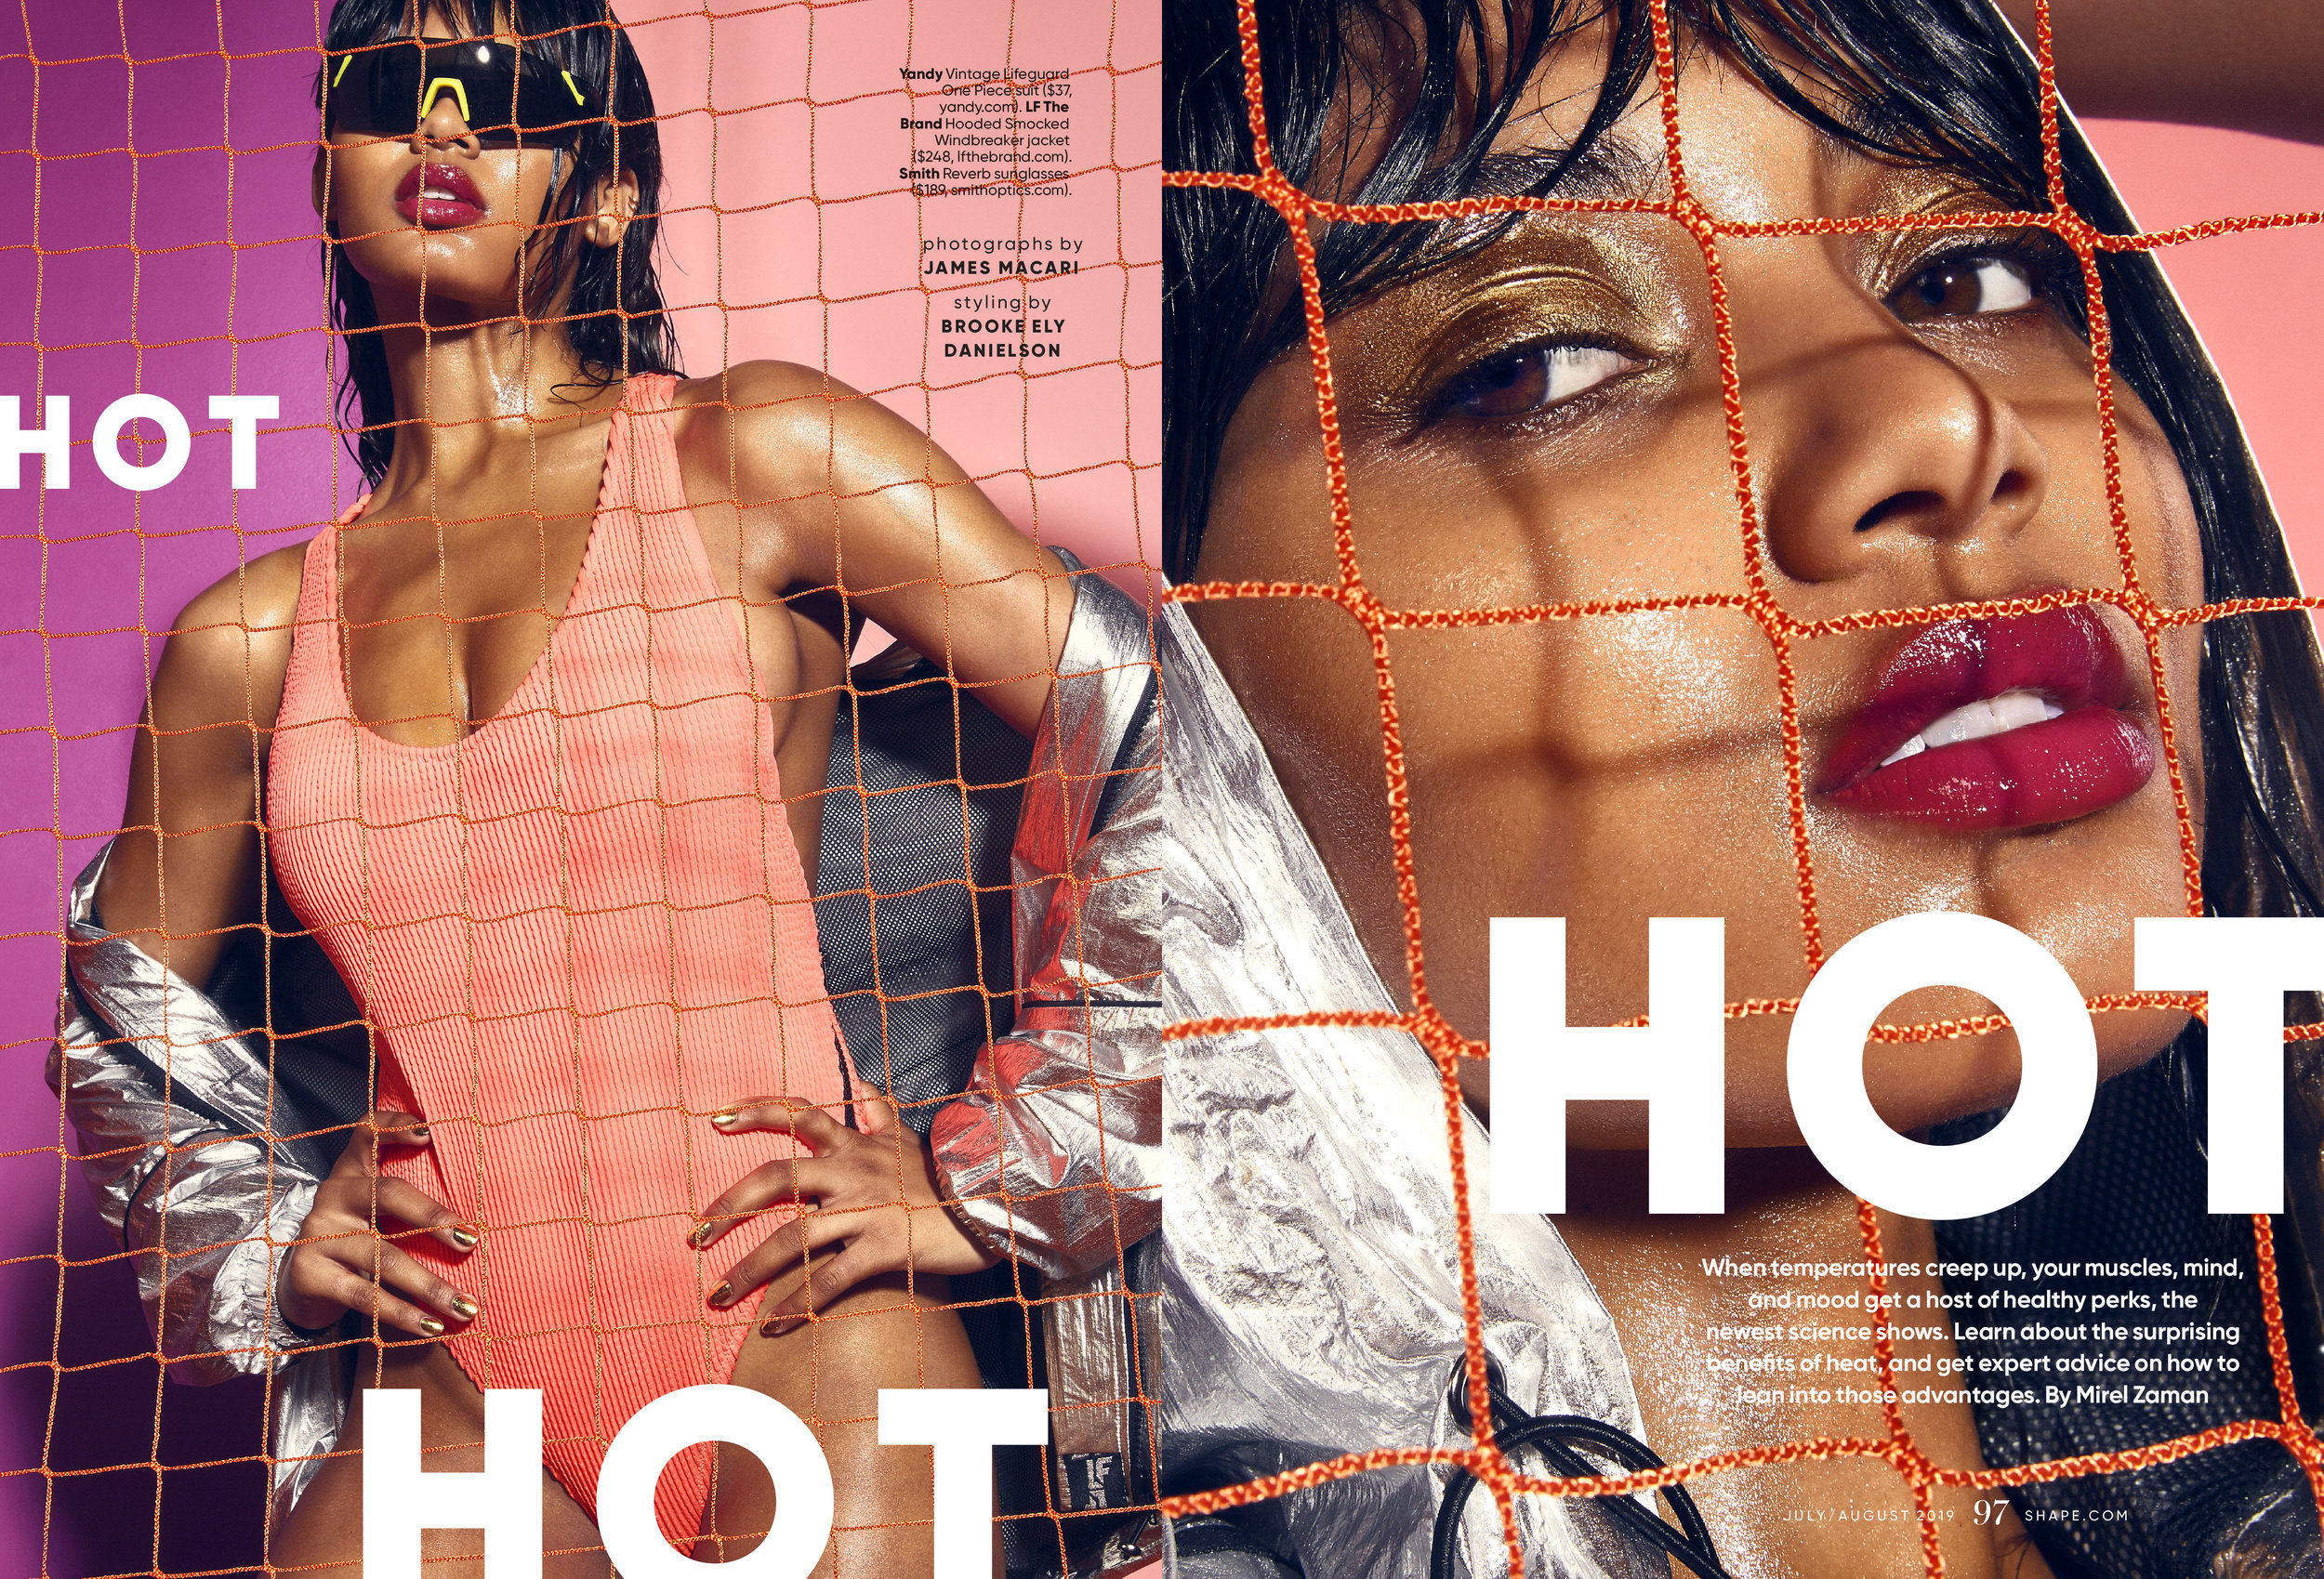 Hot Hot Hot, July 2019